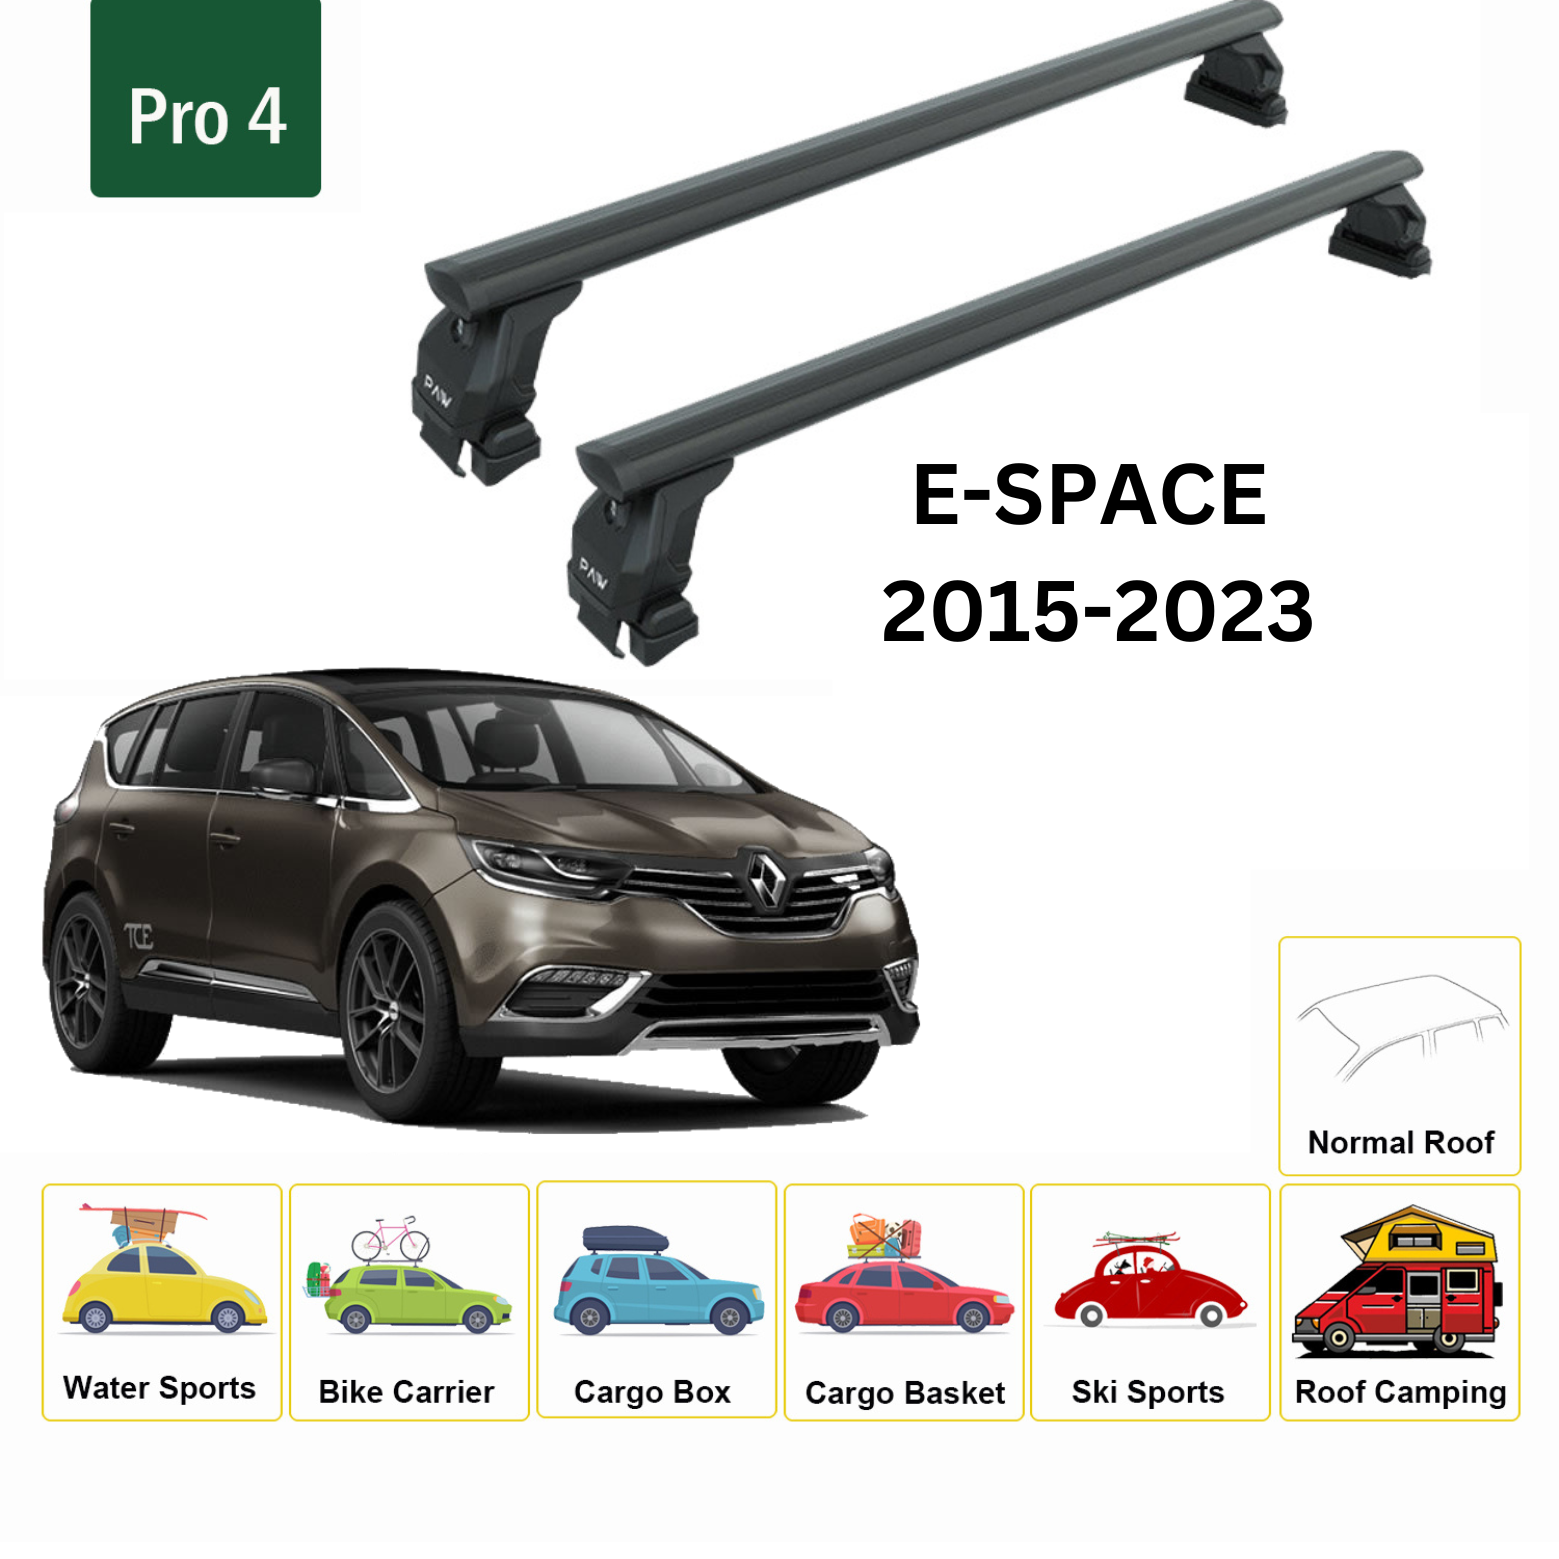 For Renault E-Space 2015-2023 Roof Rack System, Aluminium Cross Bar, Metal Bracket, Normal Roof, Black - 0